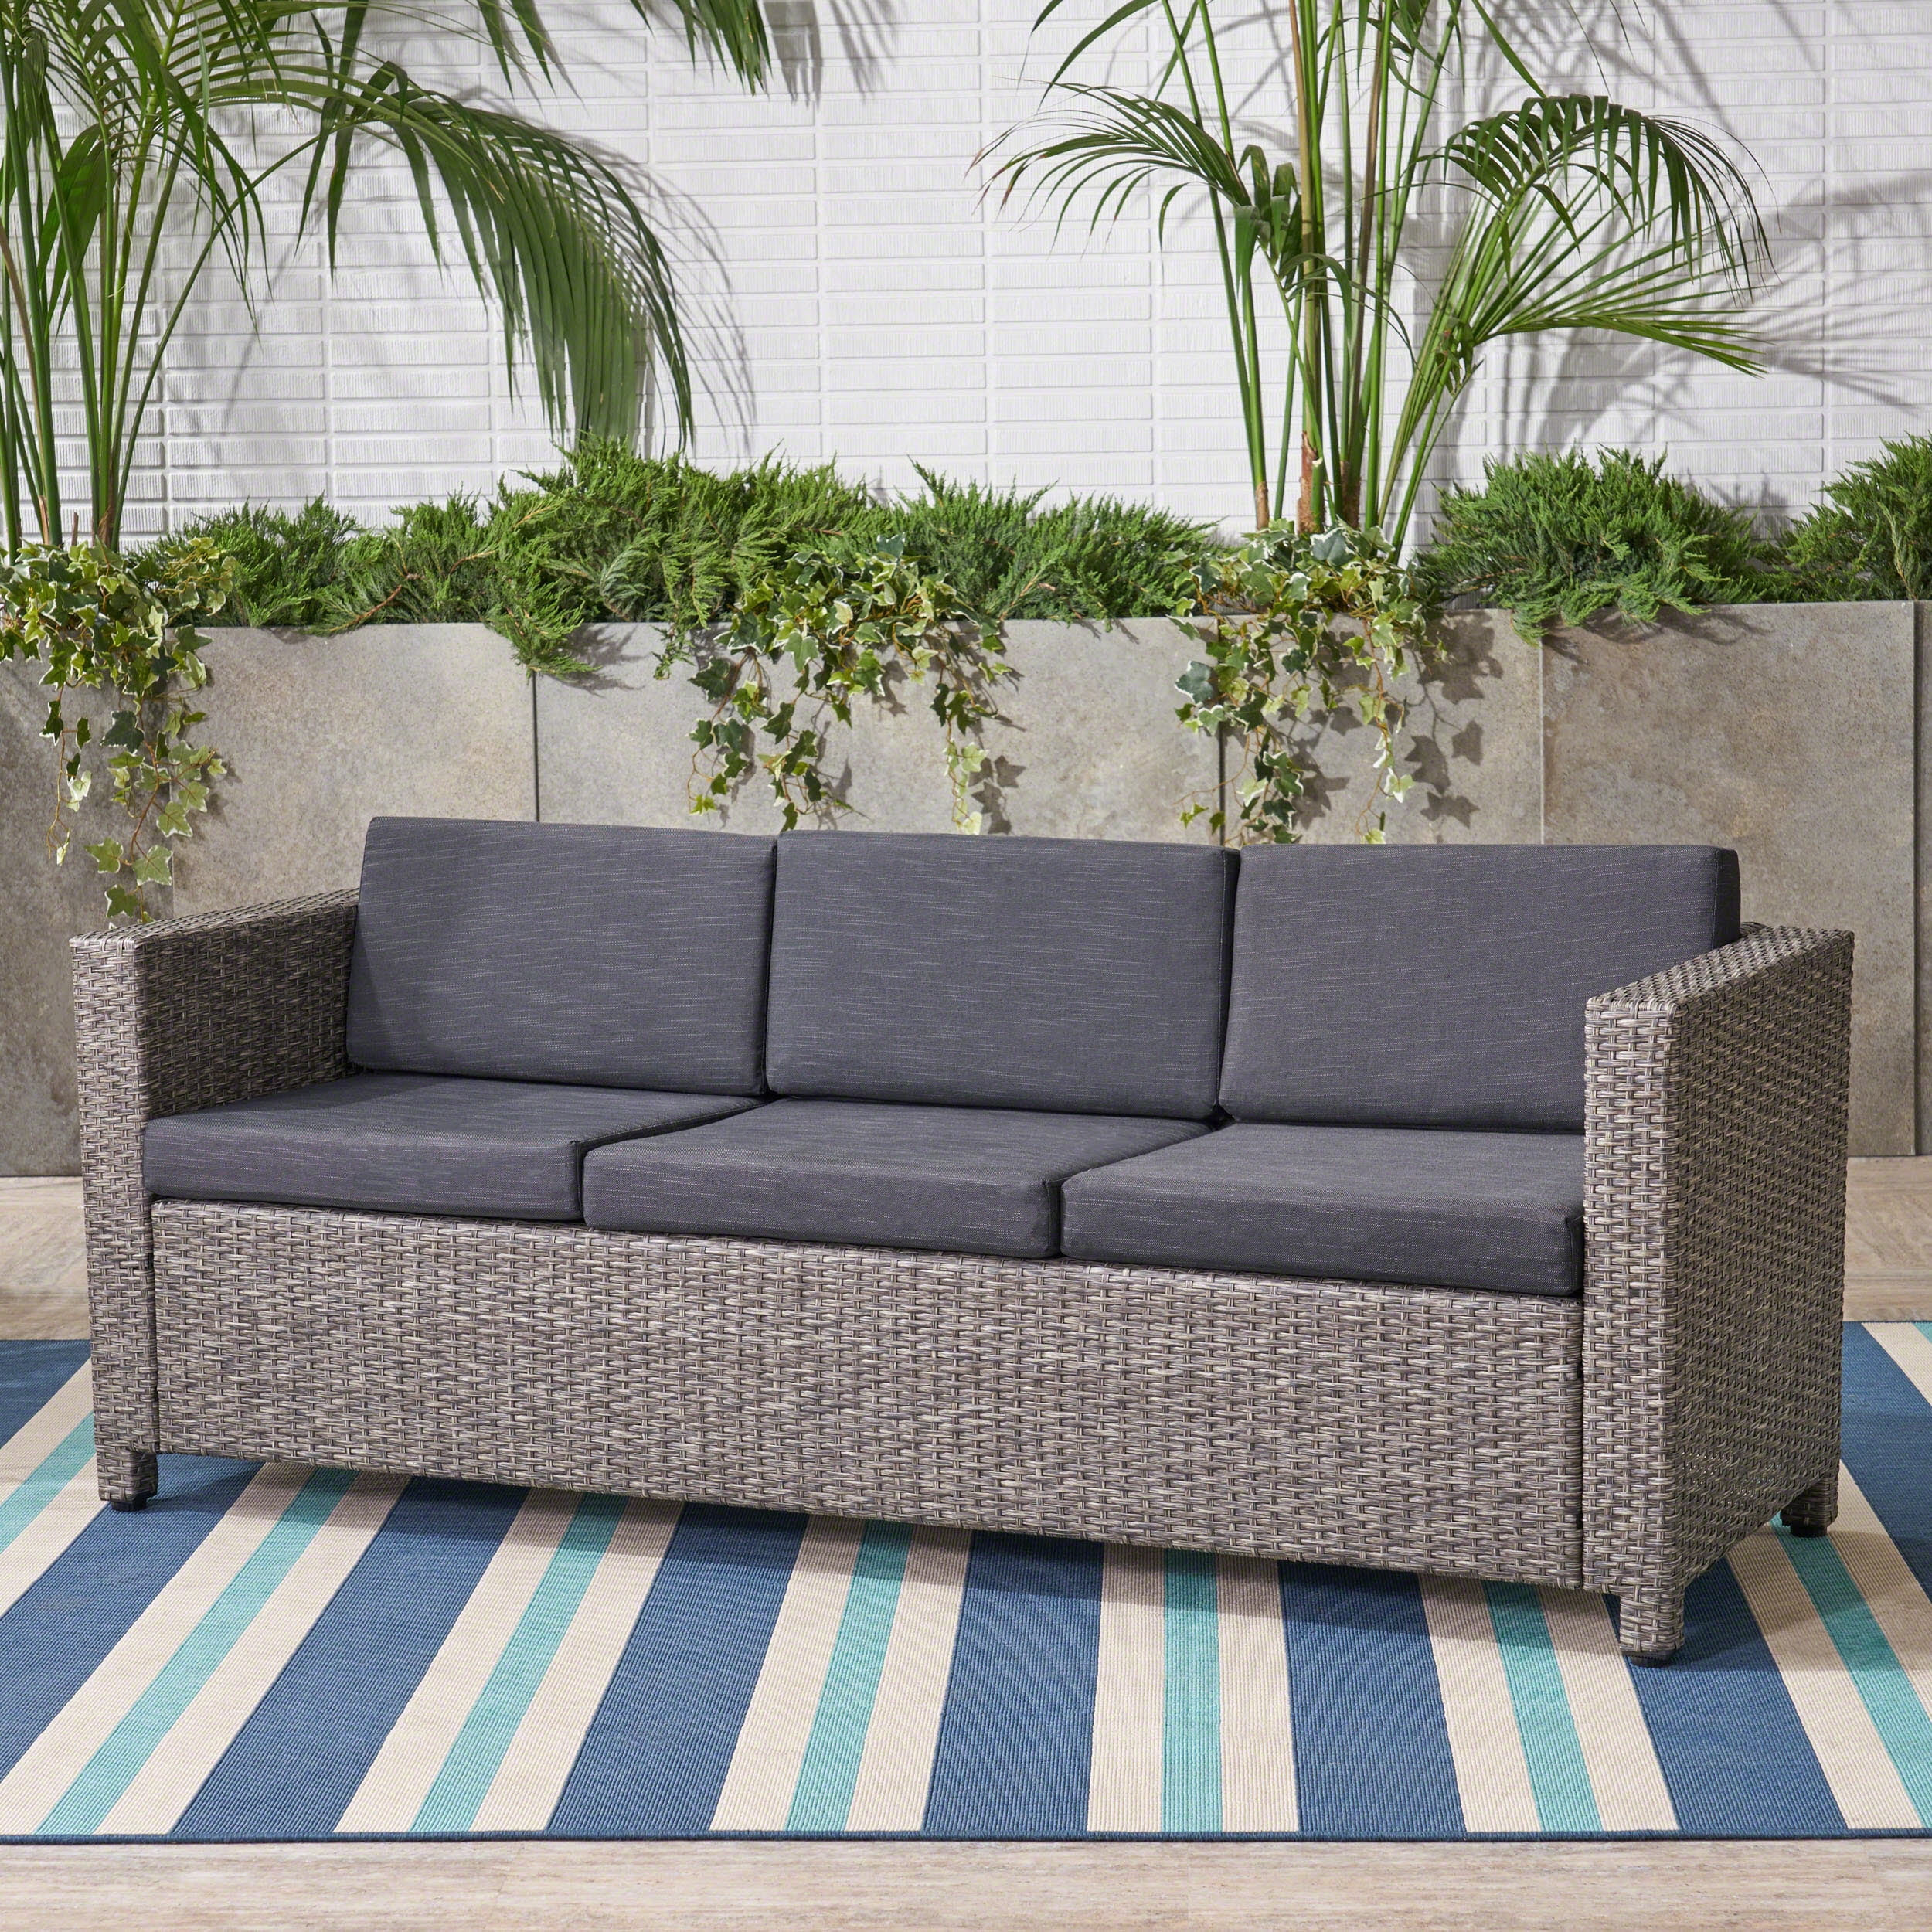 Outdoor Wicker 3 Seater Sofa with Cushions,Black,Grey - Walmart.com